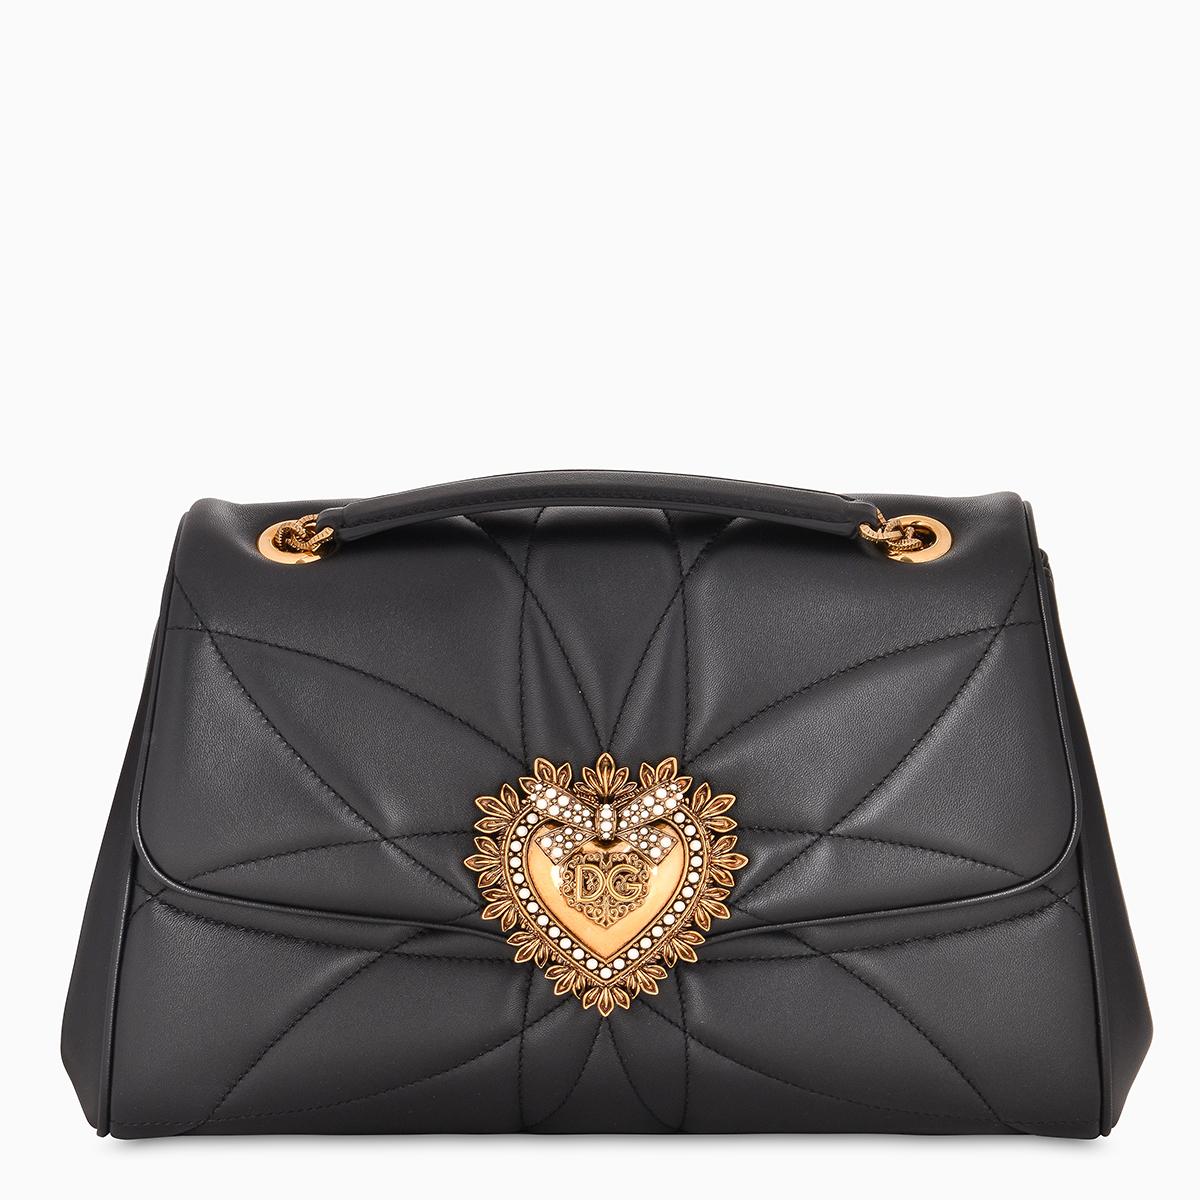 Dolce & Gabbana Leather Black Large Devotion Bag - Lyst